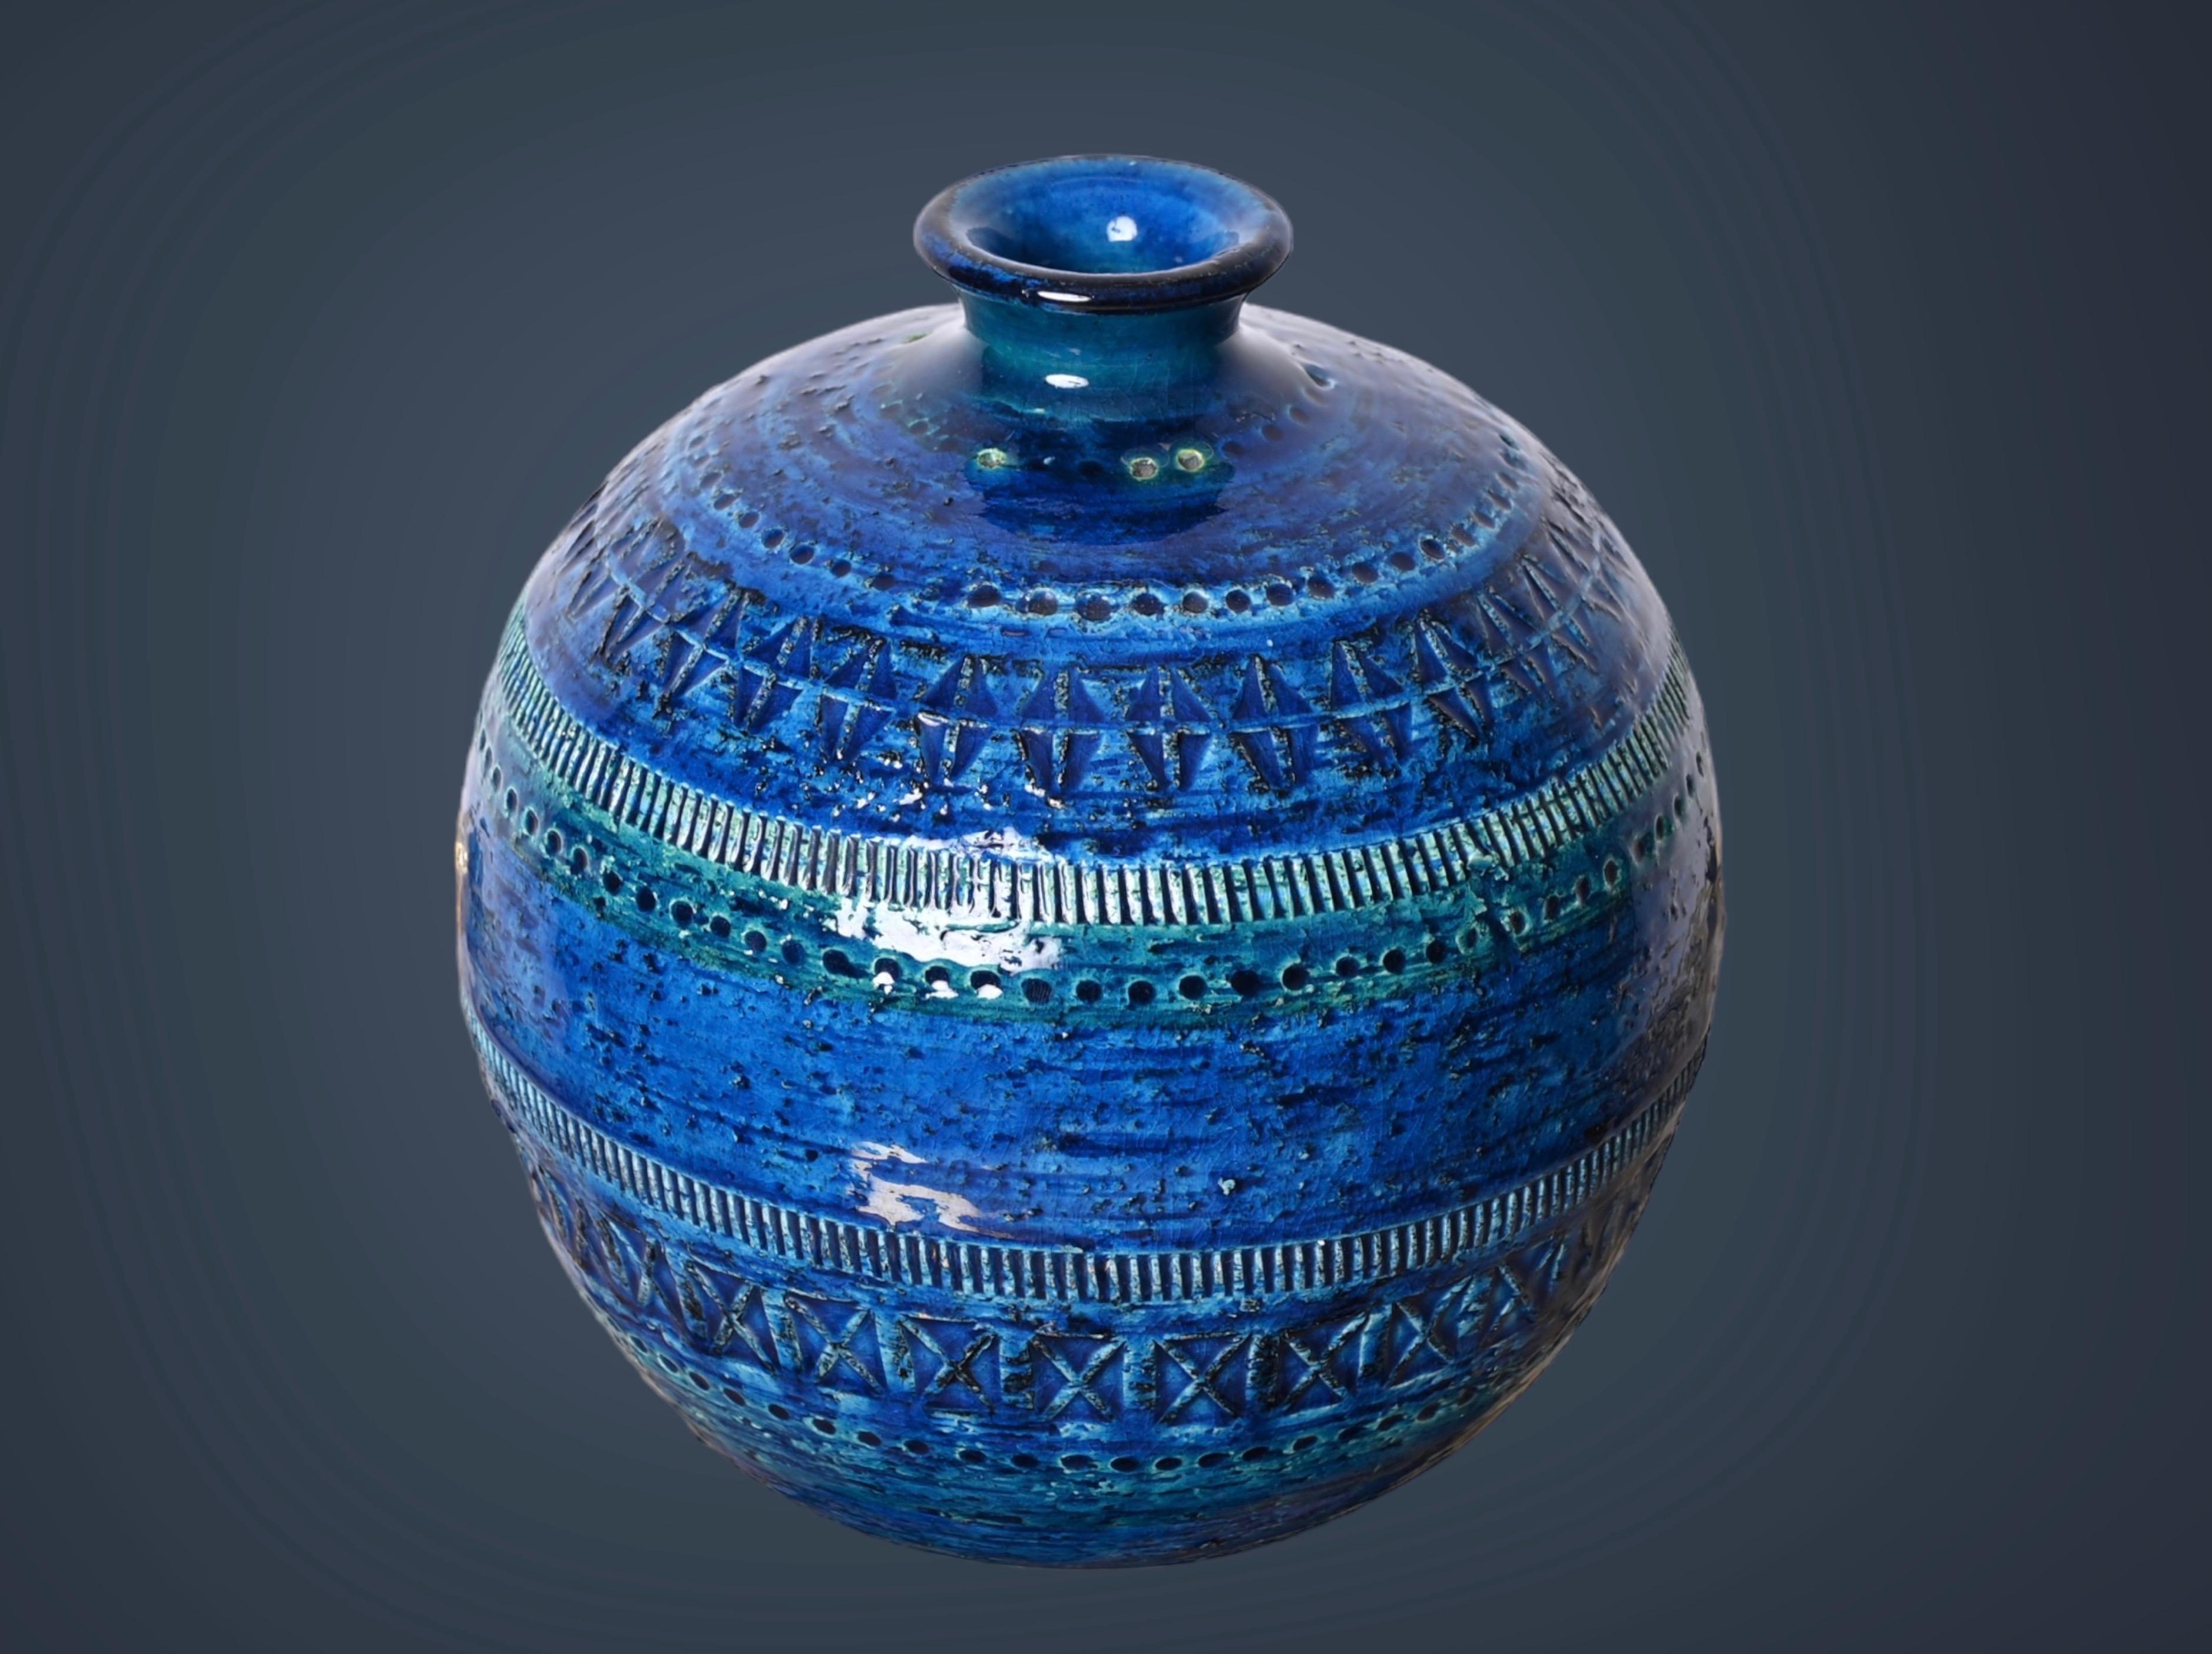 20th Century Aldo Londi Terracotta Ceramic Rimini Blue Vase for Bitossi, Italy, 1960s For Sale